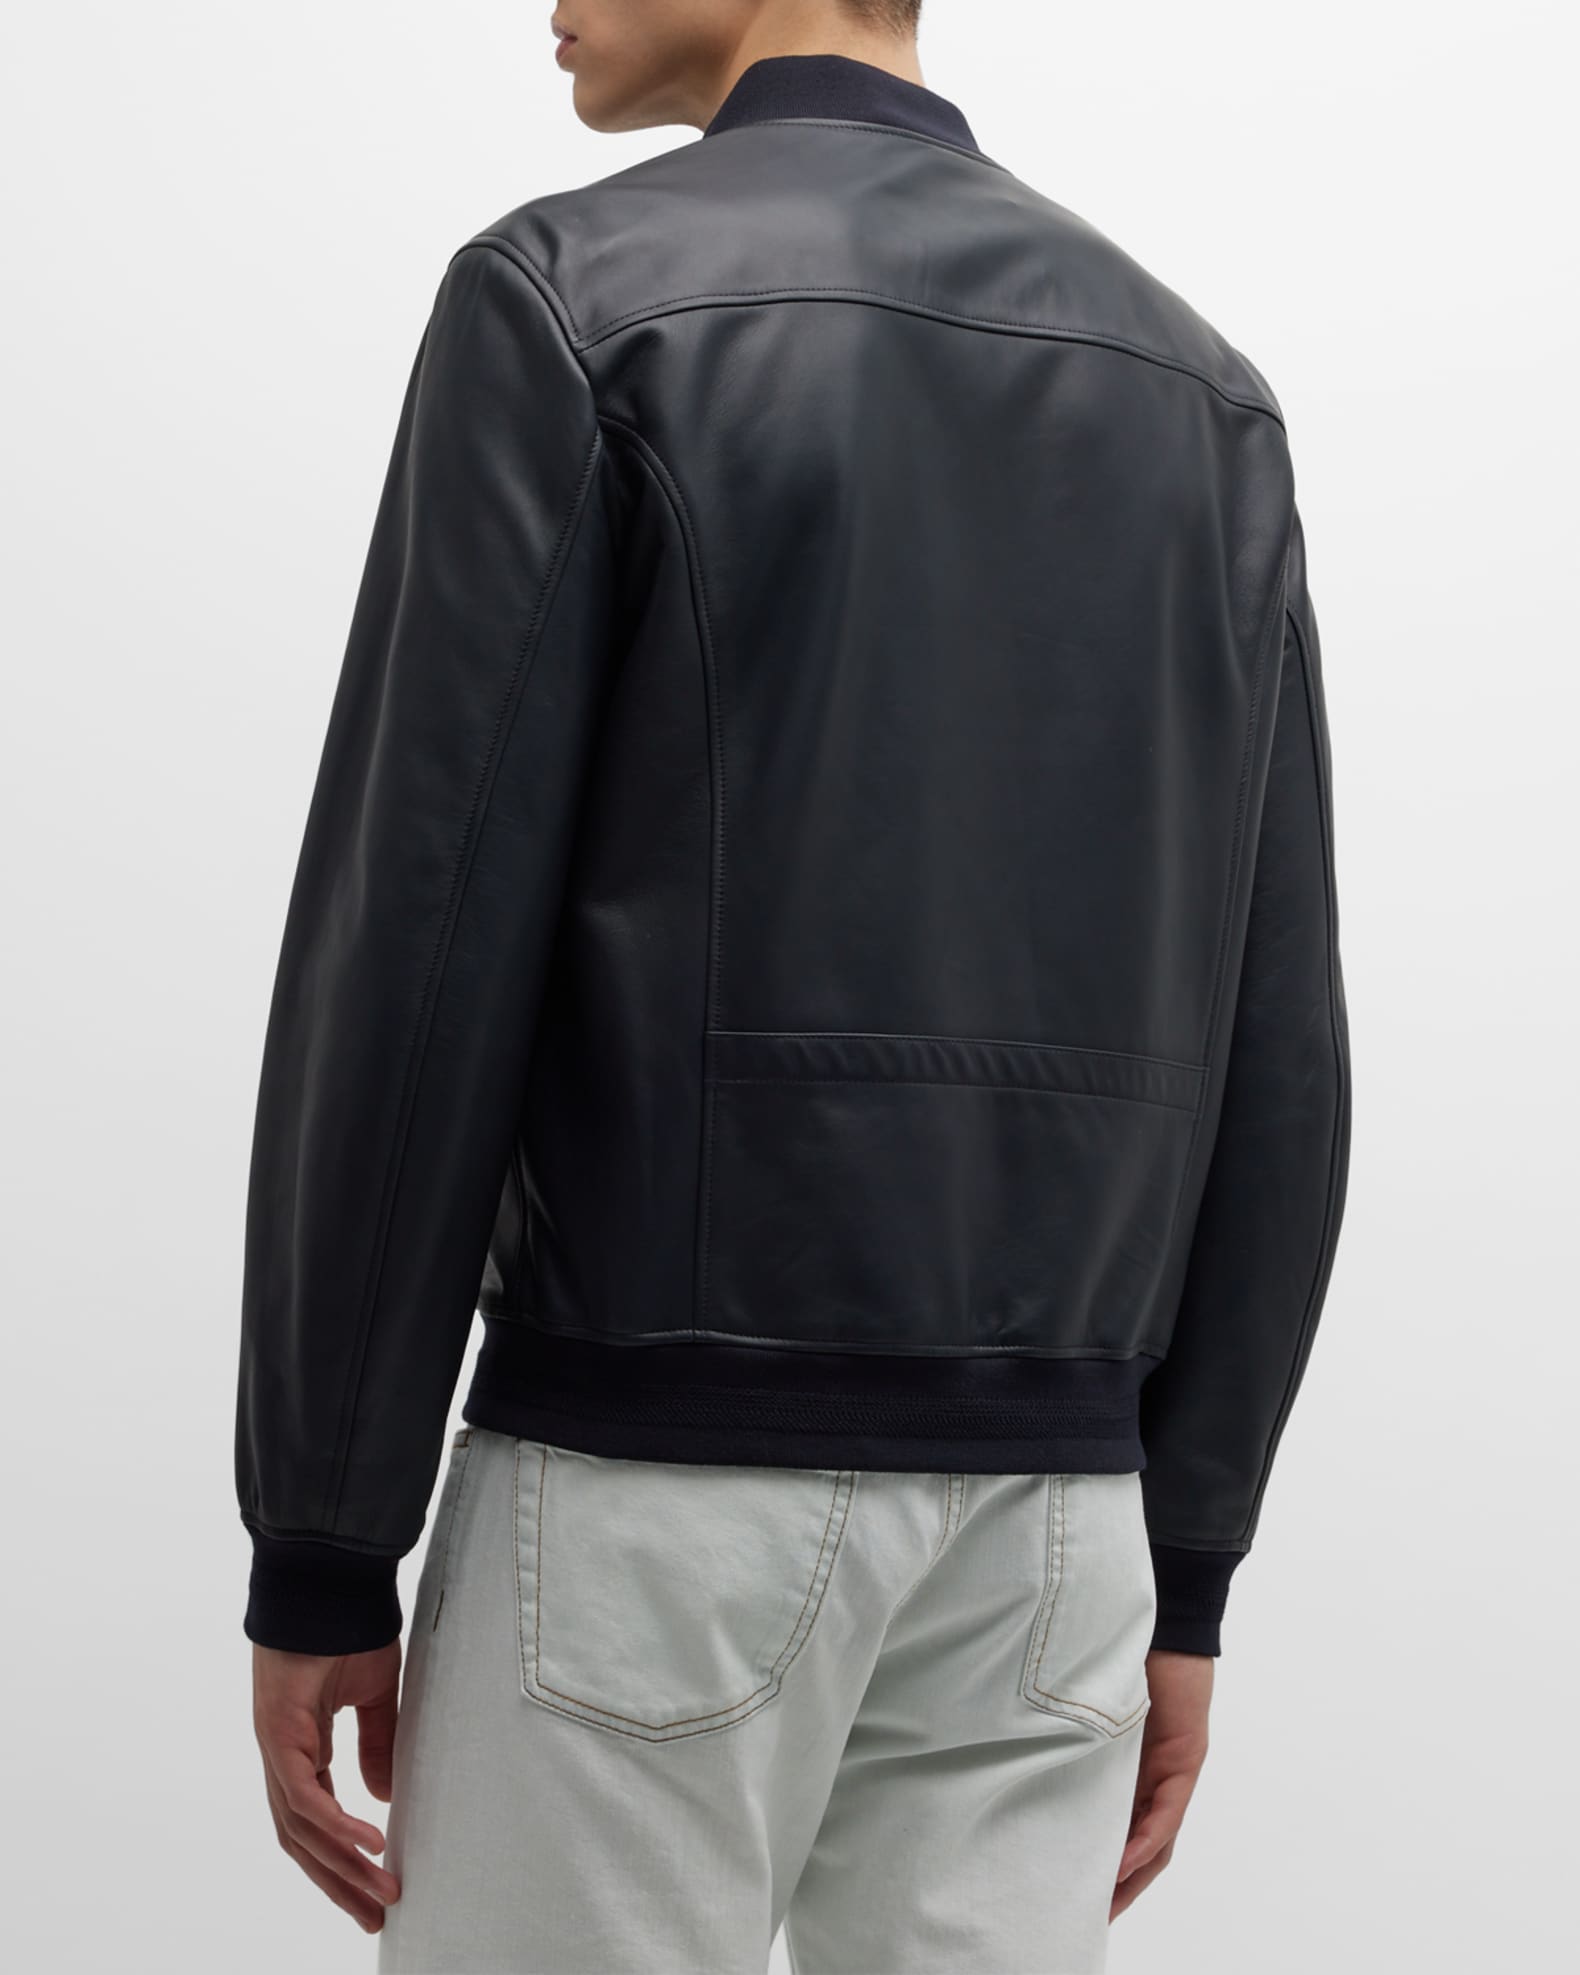 Canali Men's Midnight Leather Bomber Jacket | Neiman Marcus